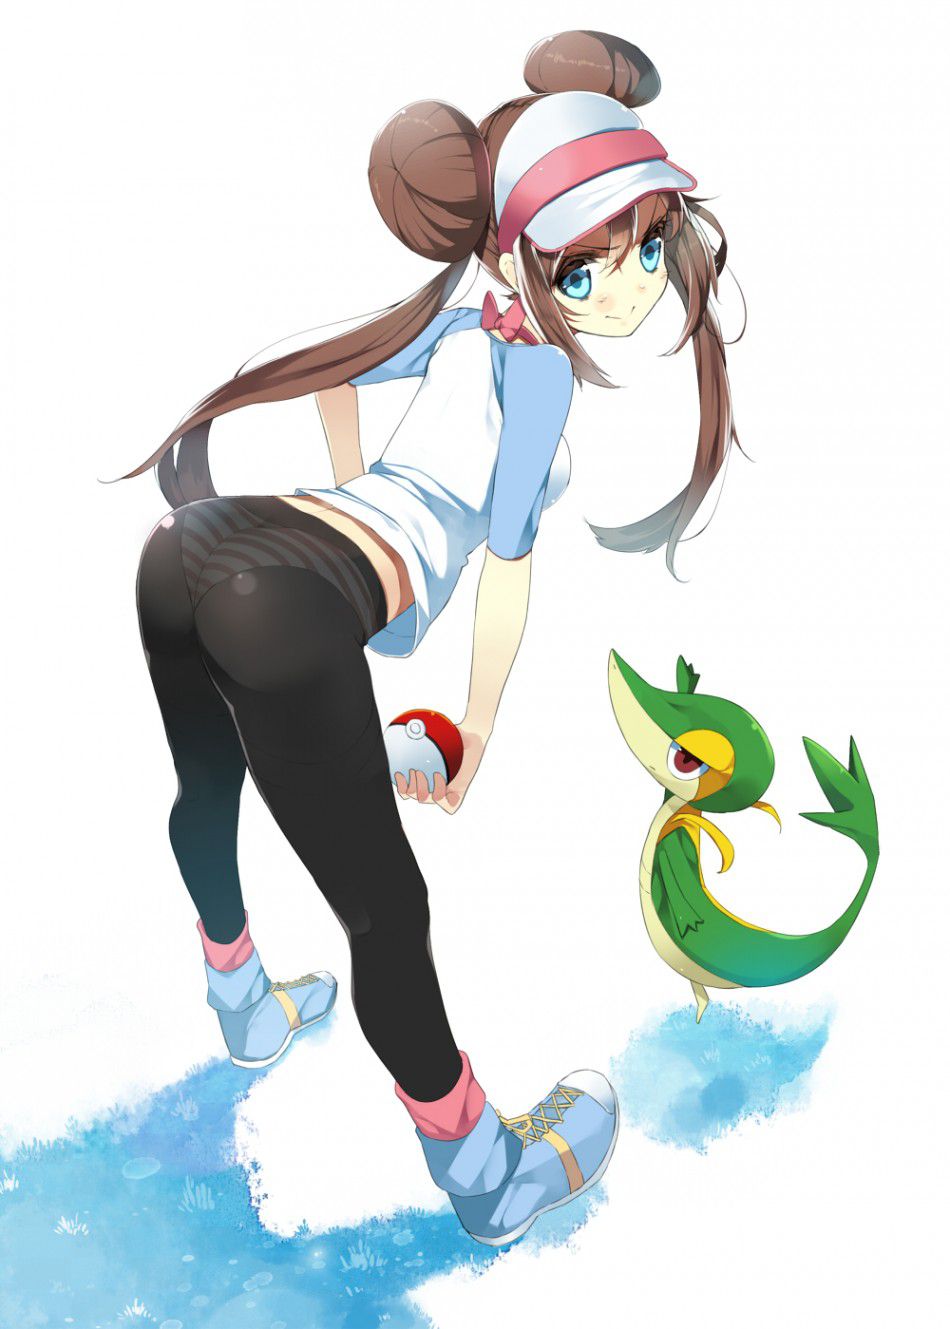 [Pokemon] Pokemon heroine, her trainer MoE erotic pictures part 6 6